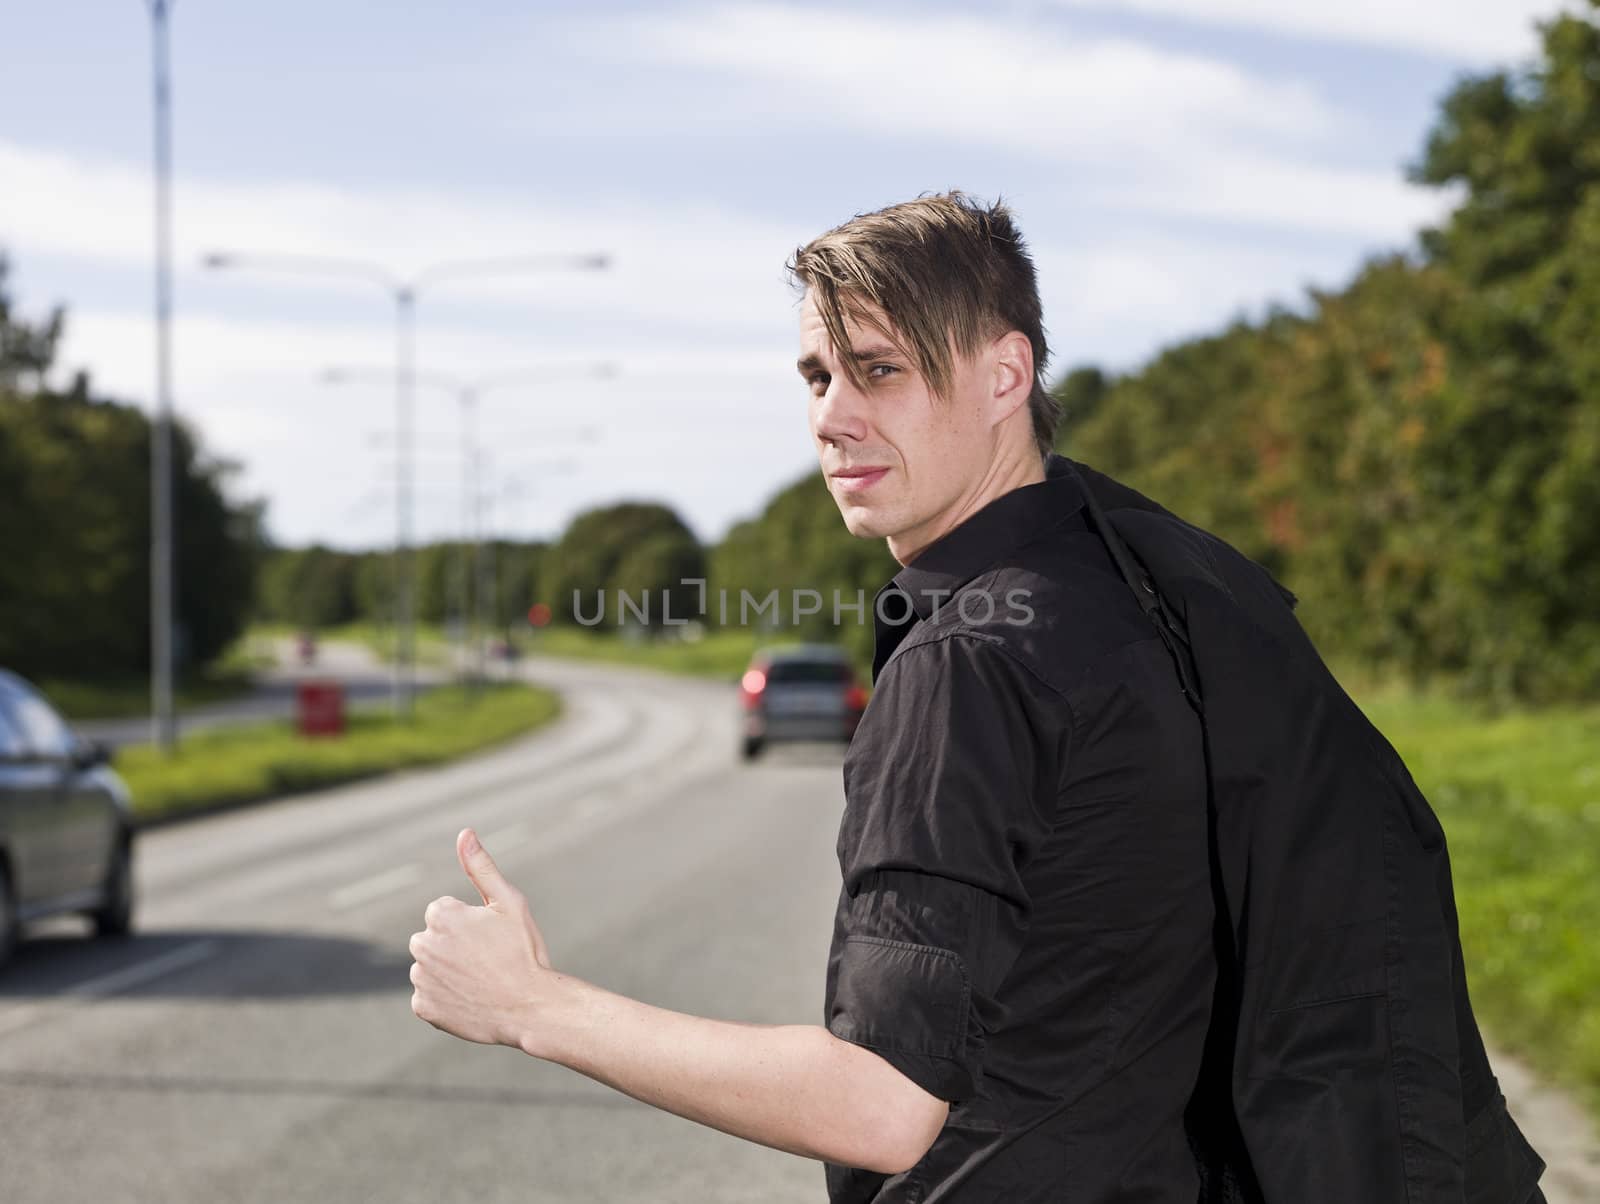 Hitchhiker by gemenacom